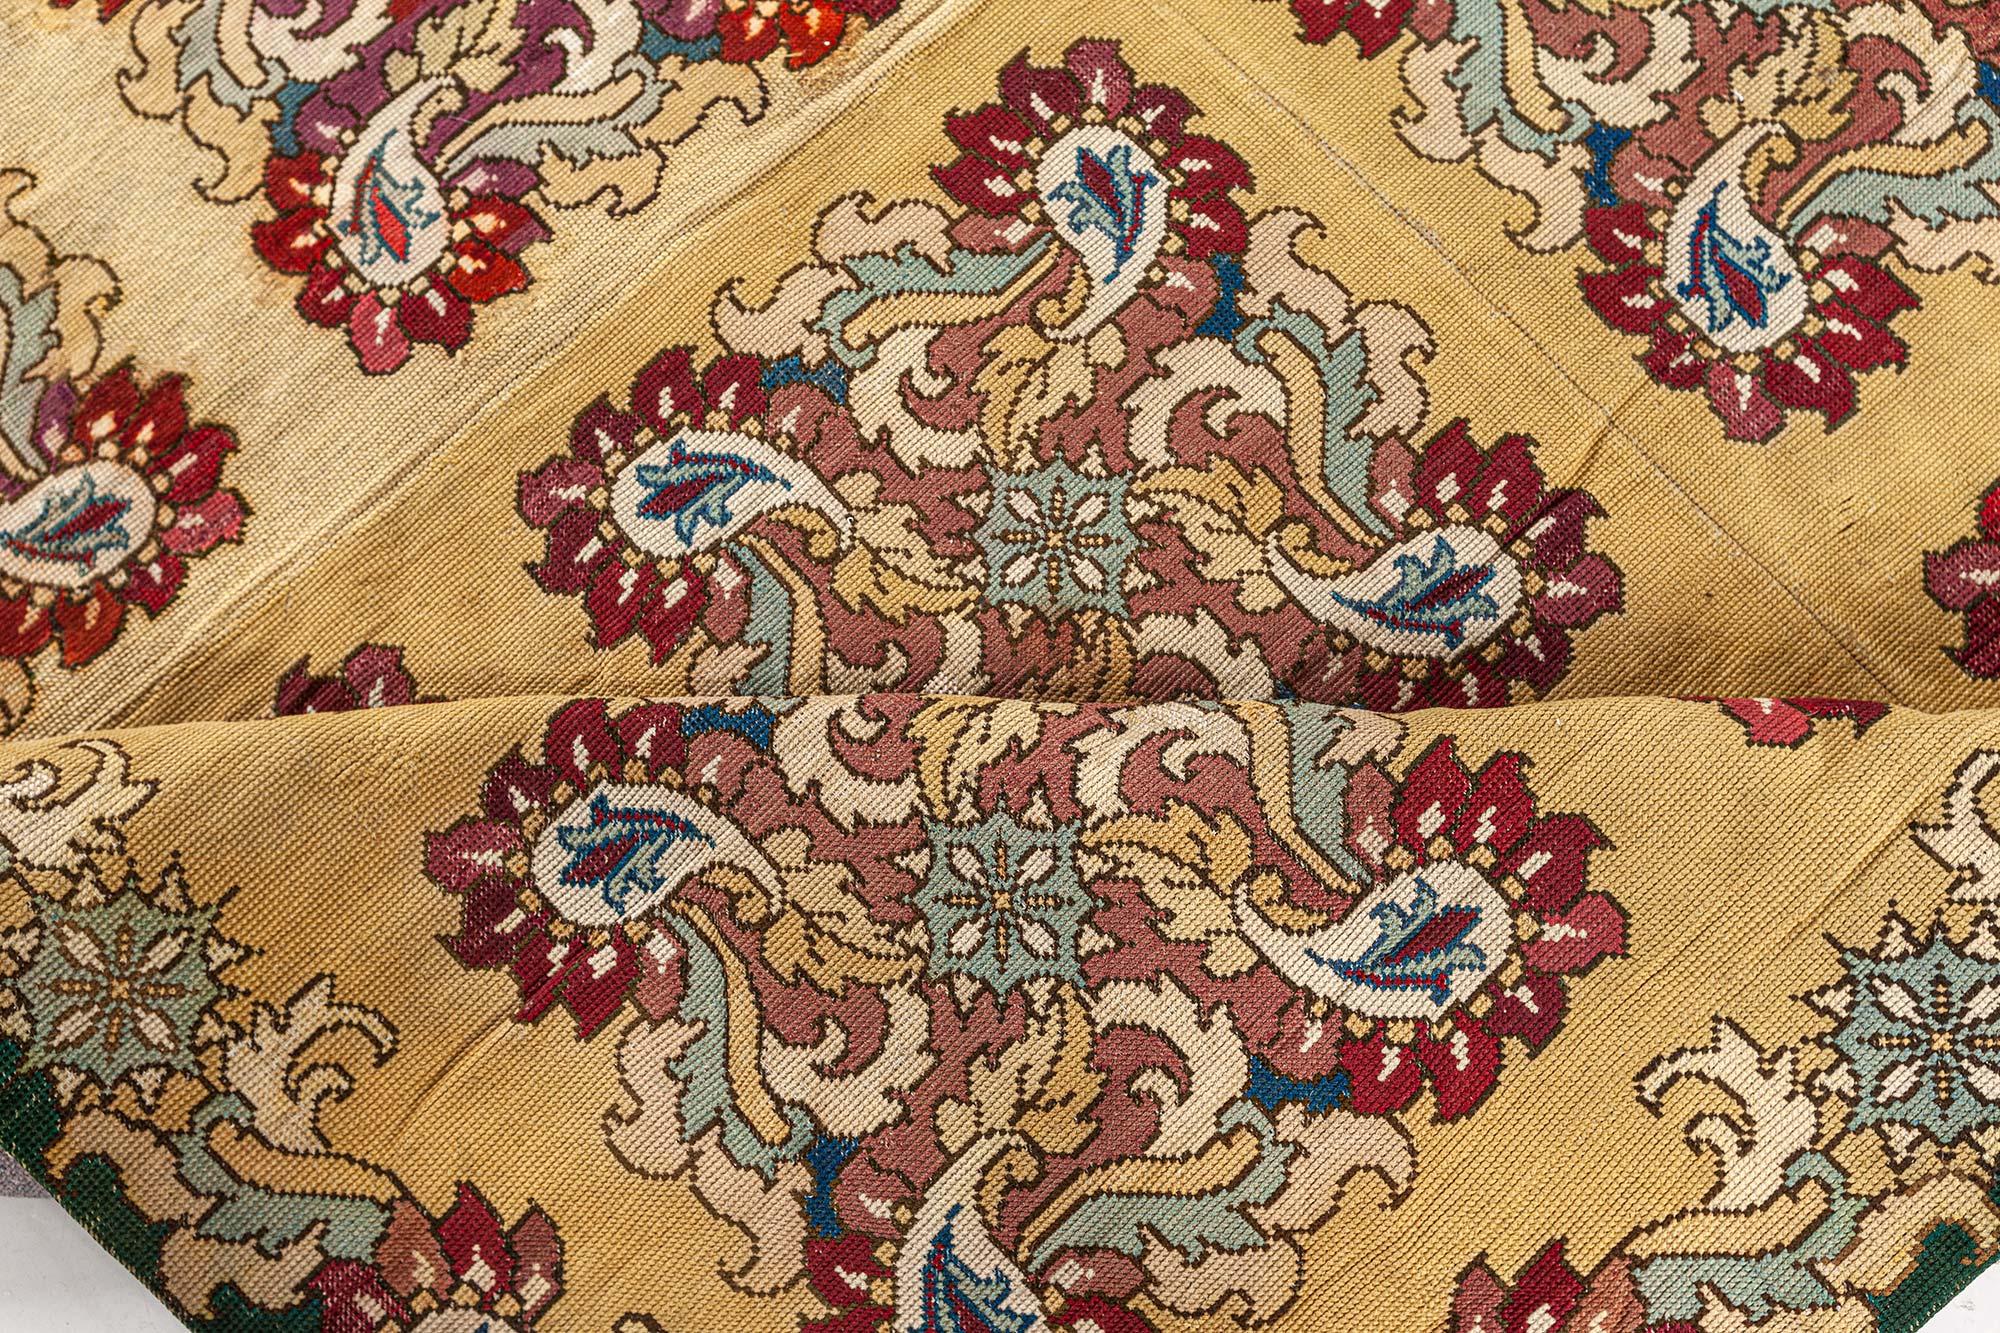 19th Century European needlepoint rug
Size: 6'1